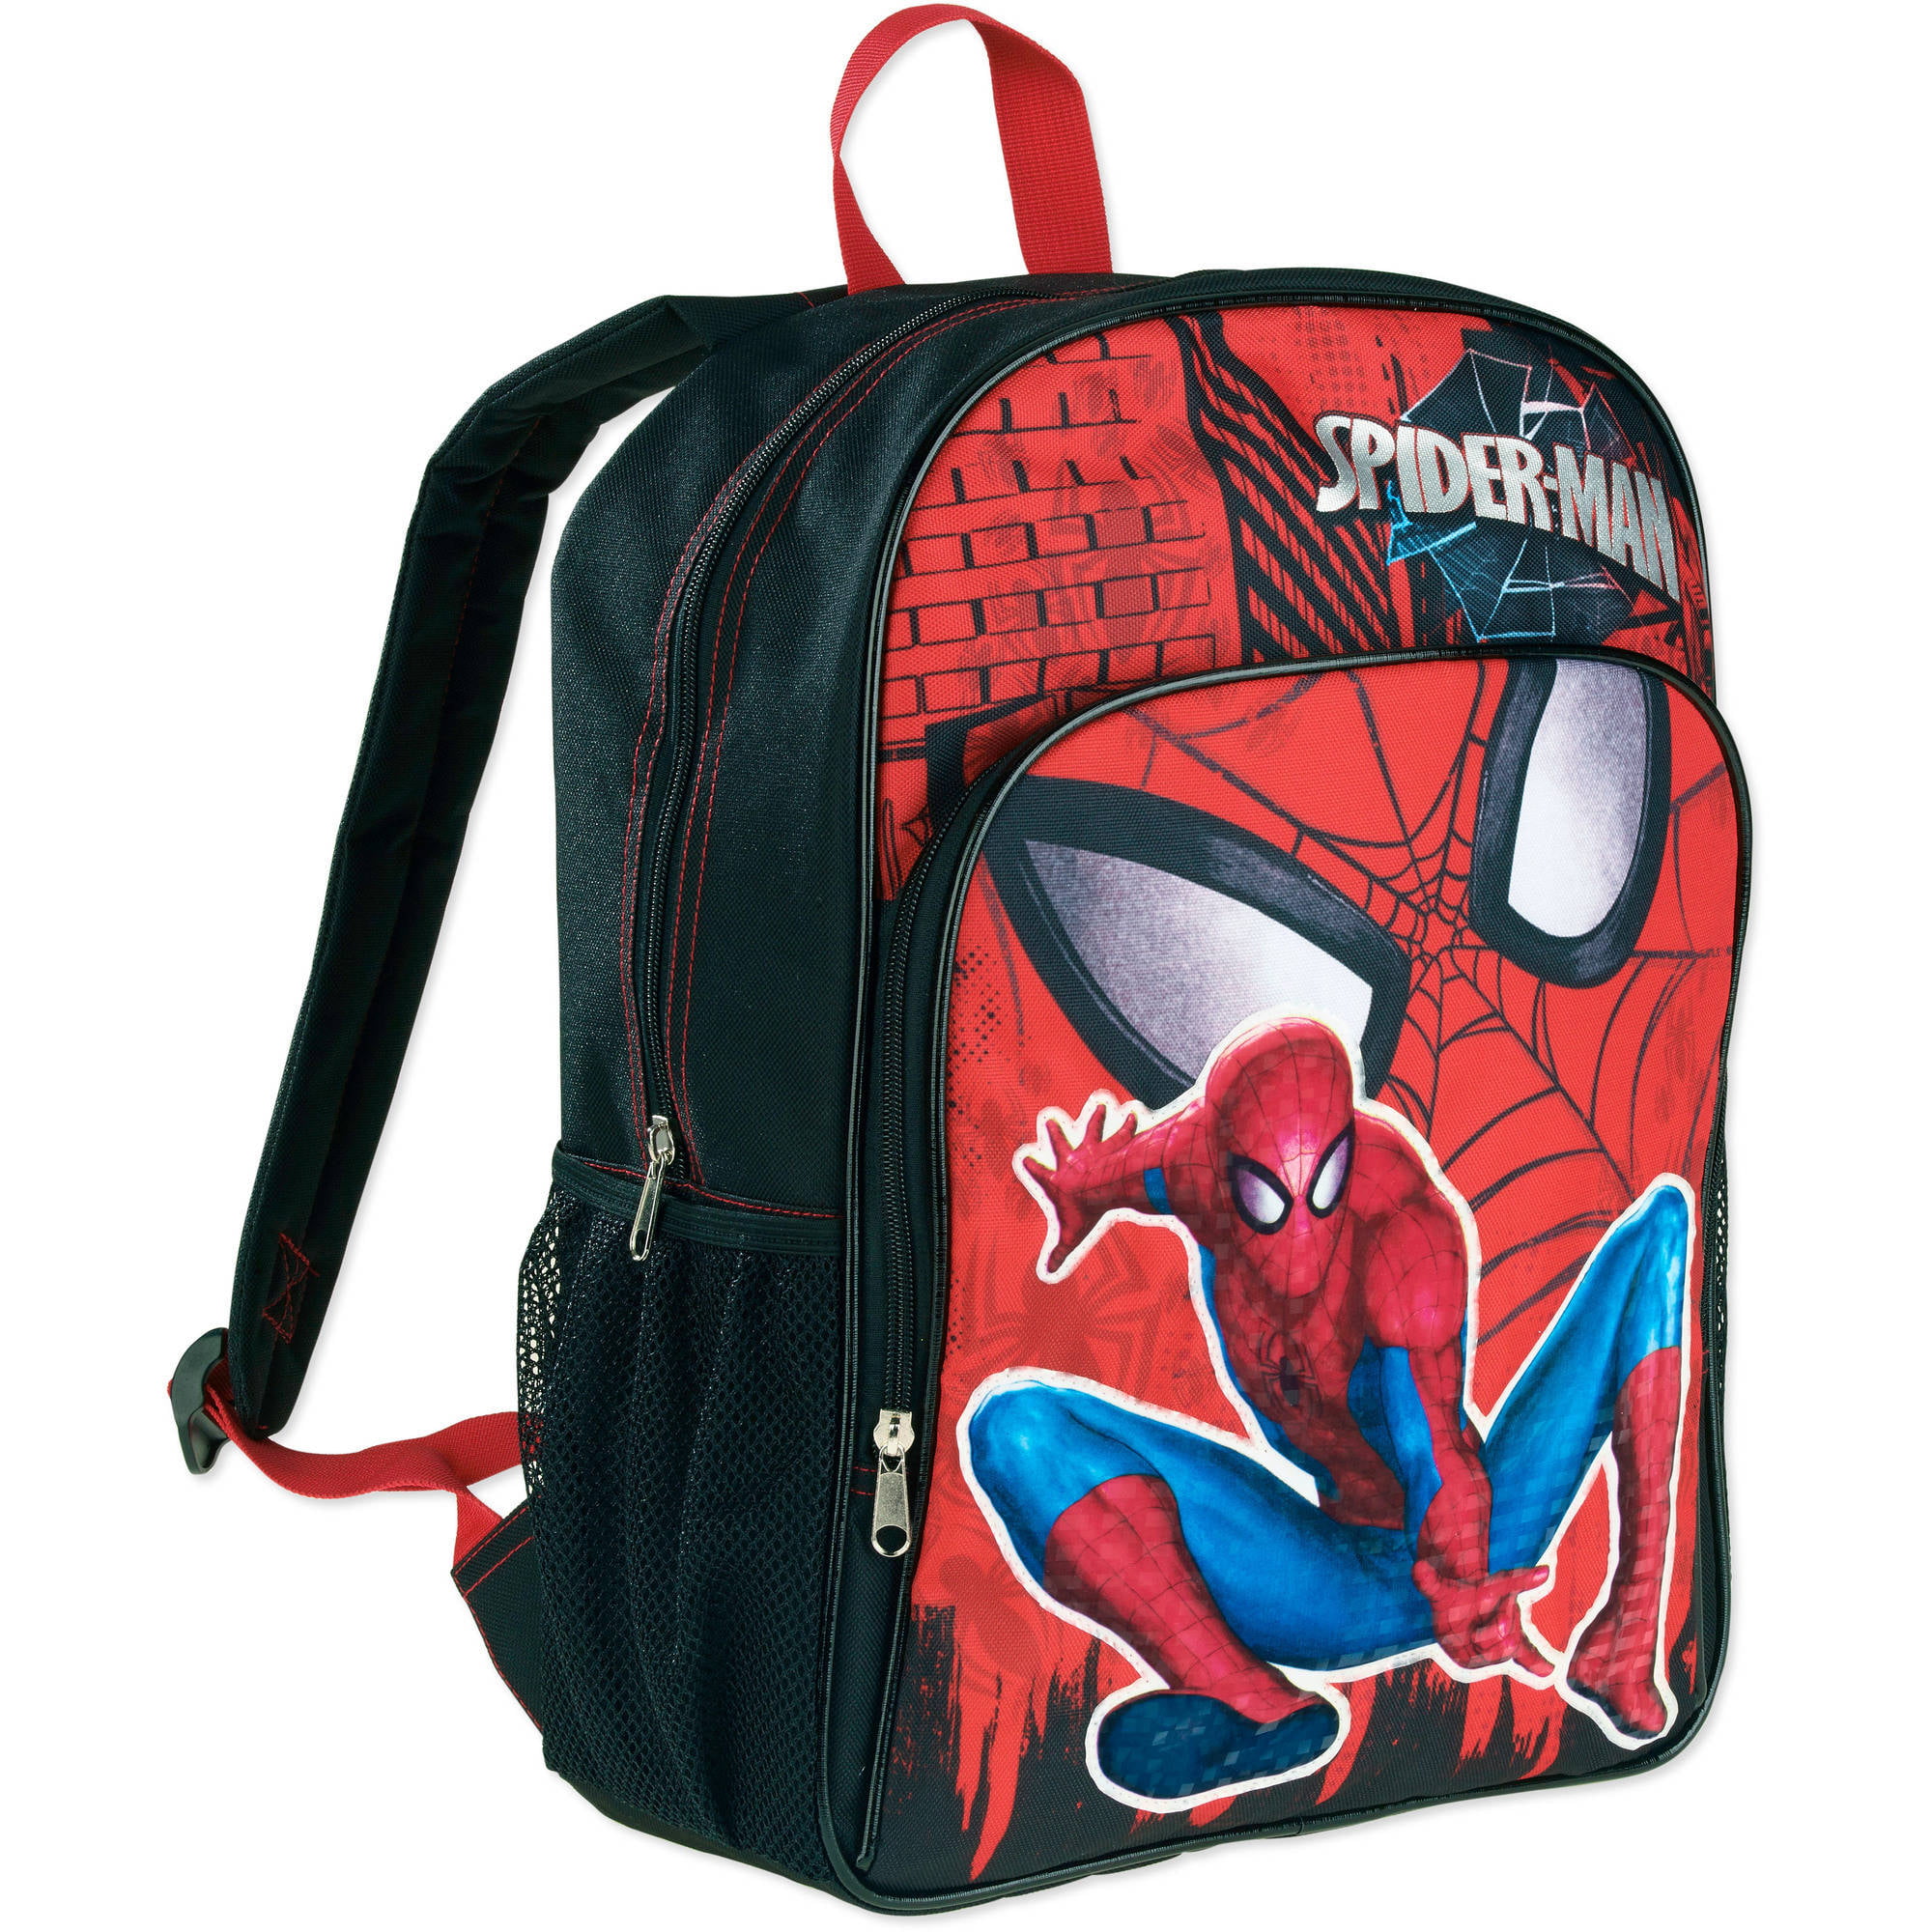 License - Spiderman Kids Backpack - Walmart.com - Walmart.com